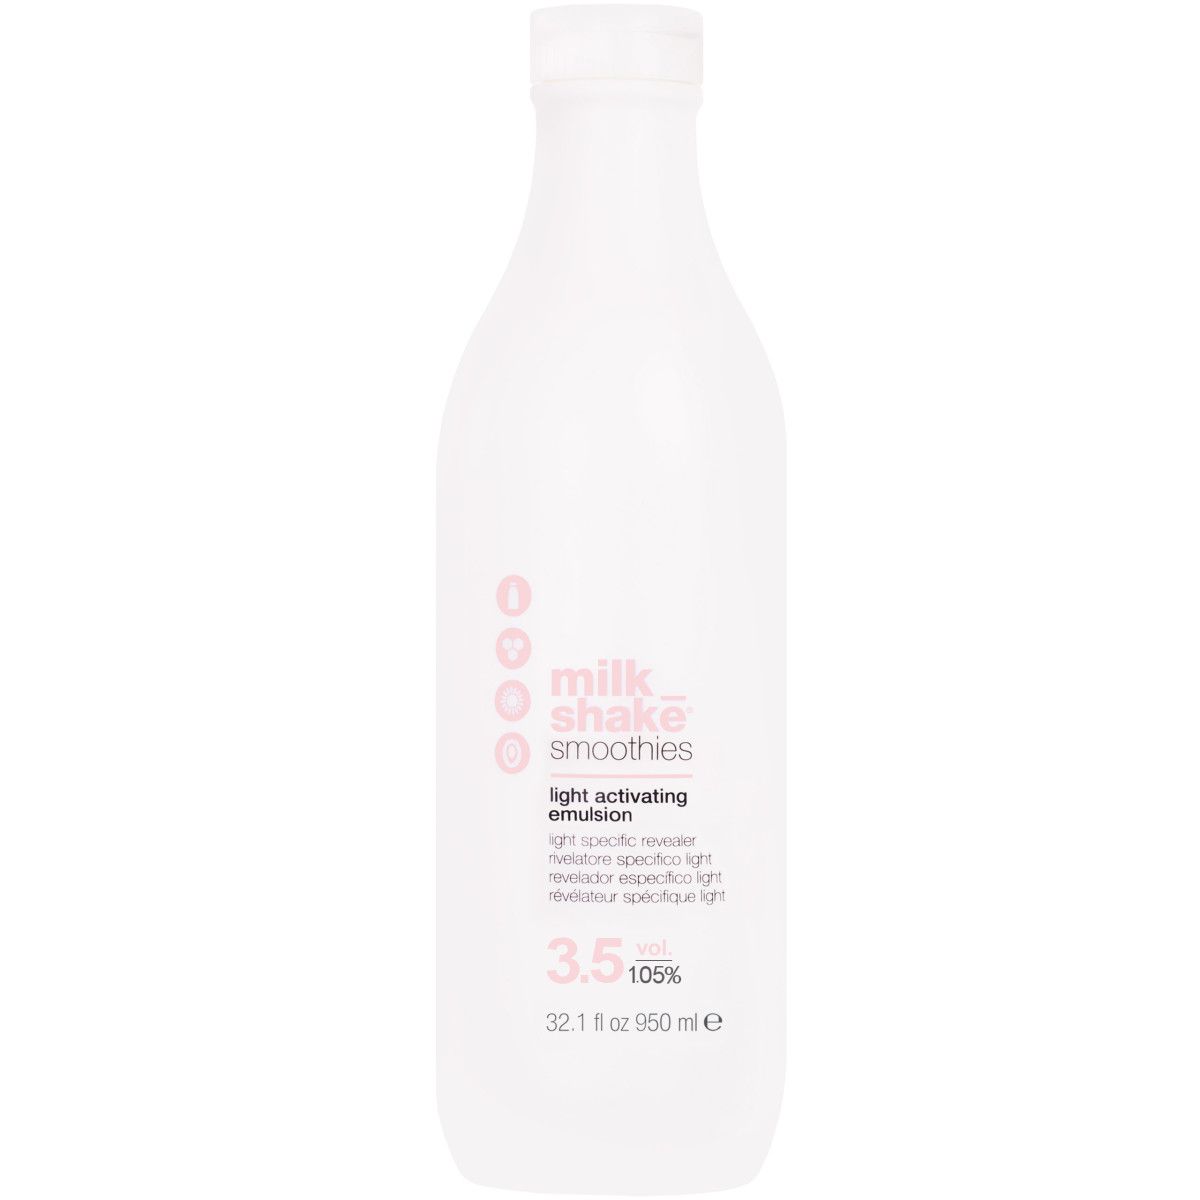 Milk Shake Smoothies Light Activating Emulsion 3,5% - emulsja aktywująca do farb, 950ml